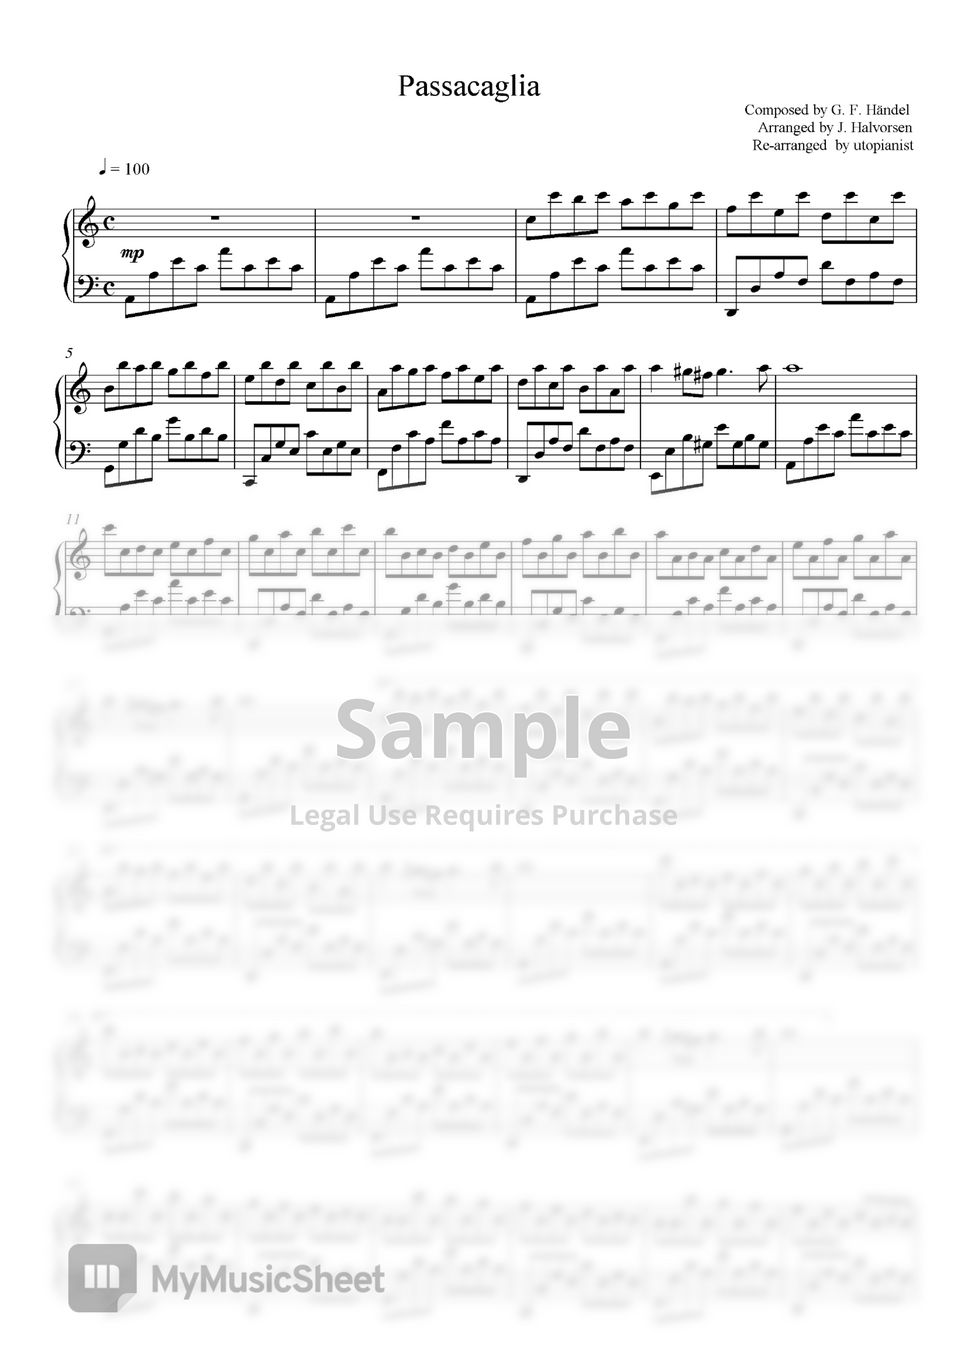 G. F. Händel - Passacaglia (Passacaglia upgraded version) by utopianist